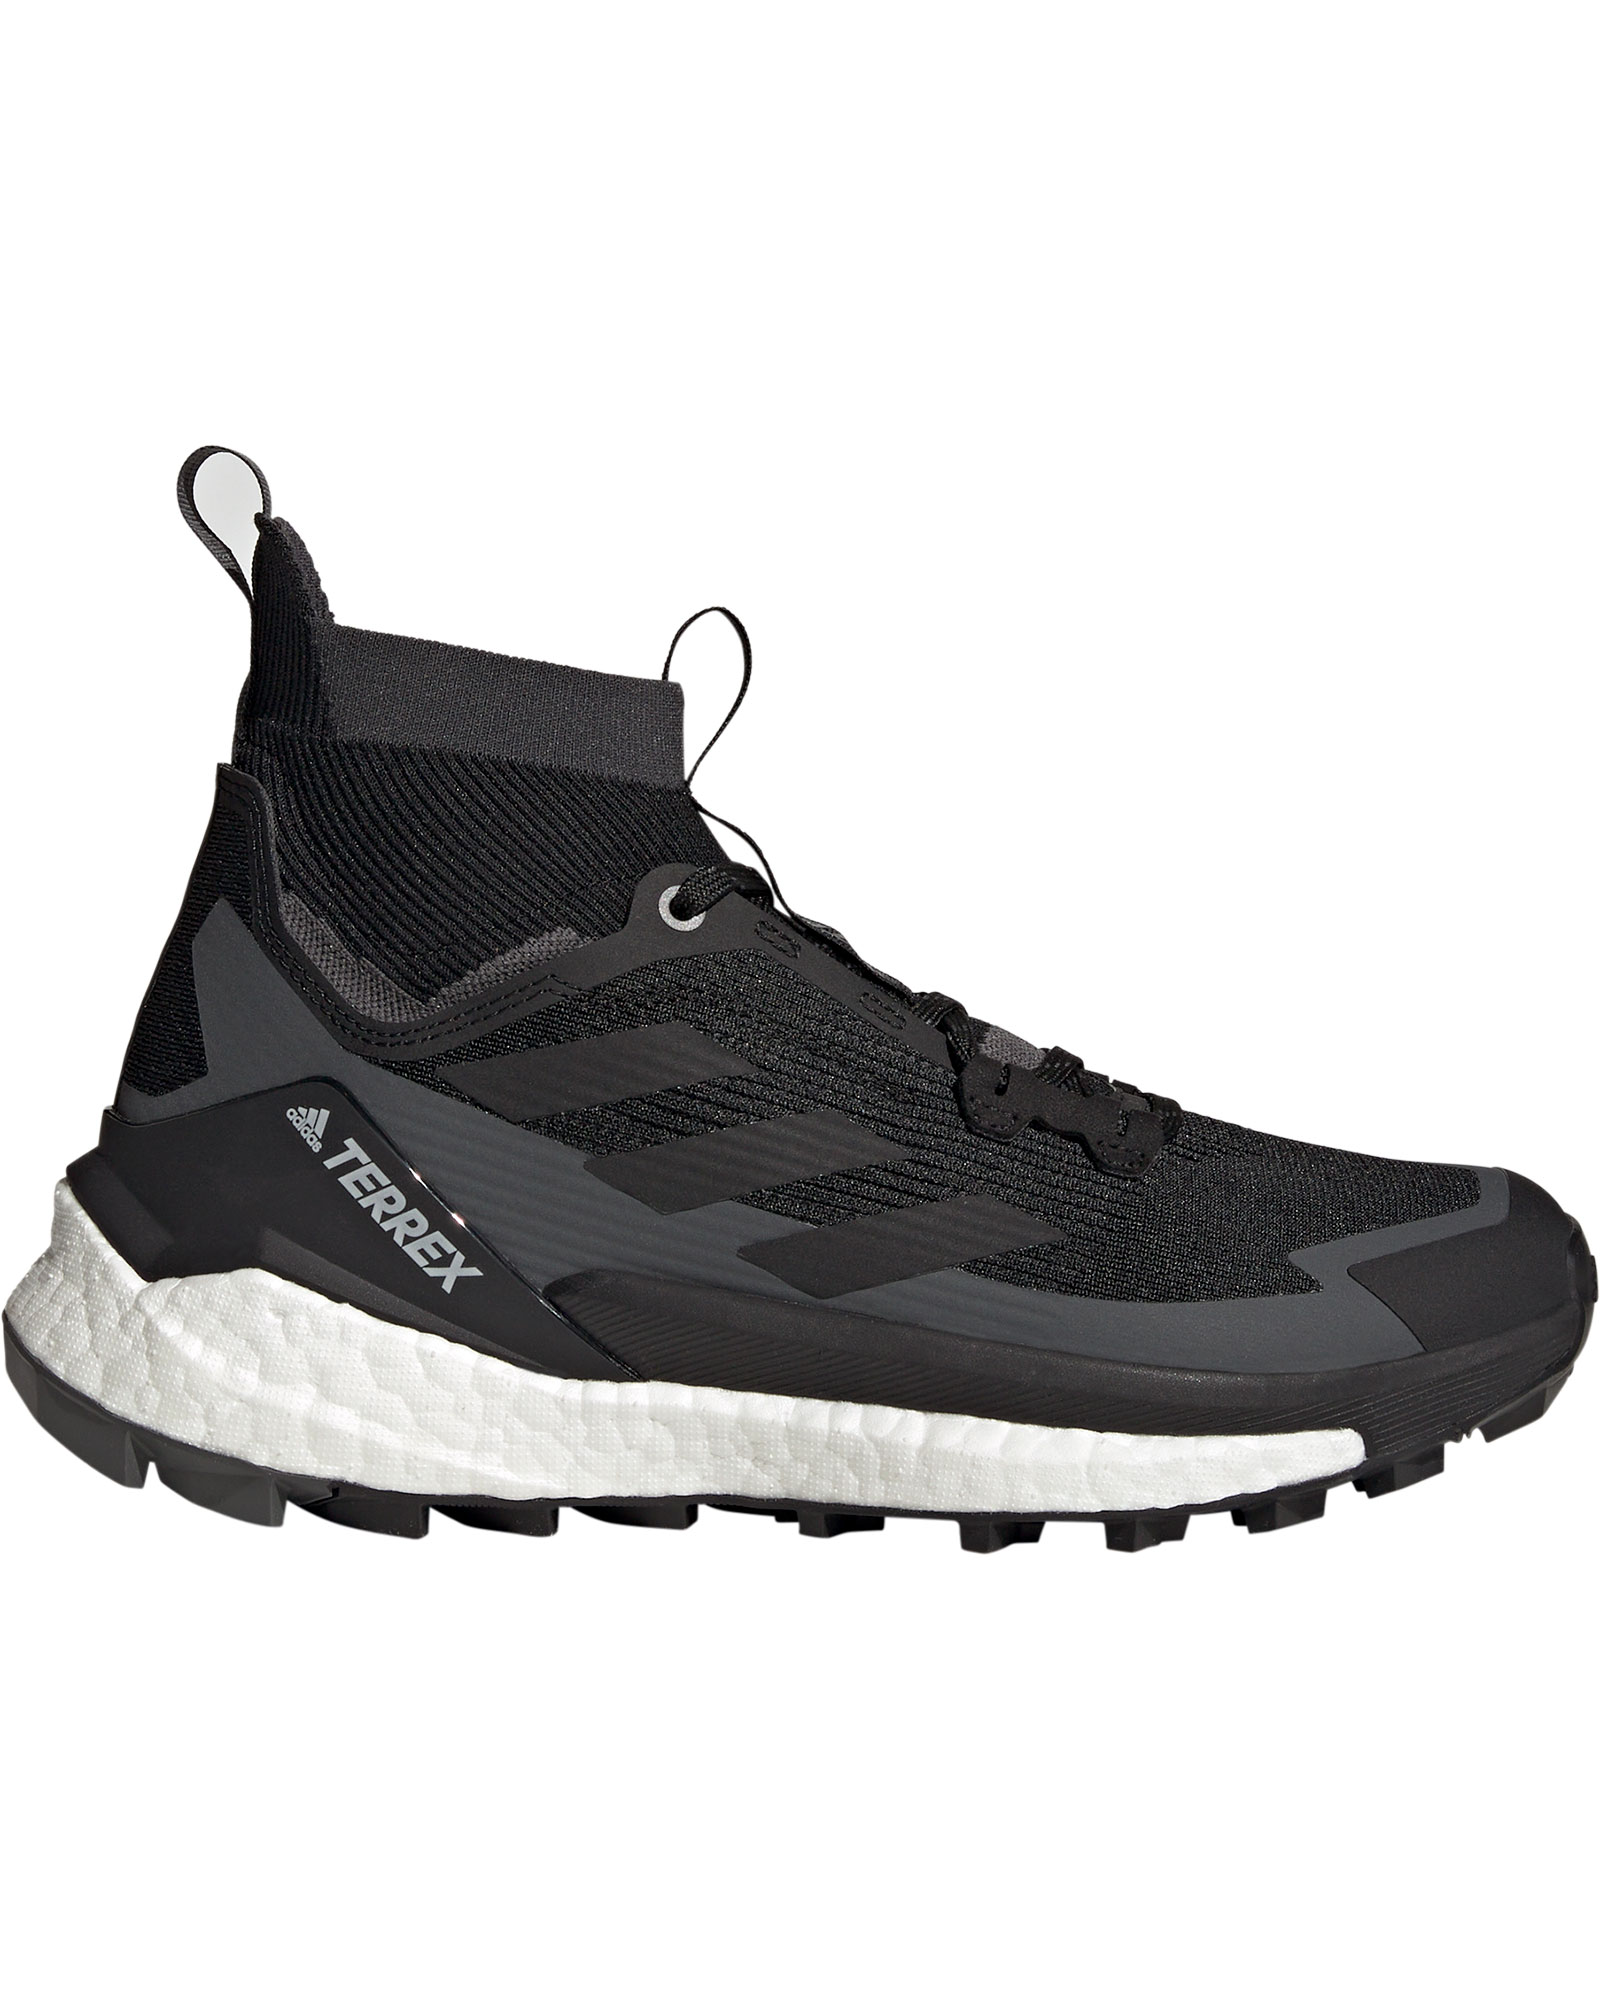 adidas TERREX Free Hiker 2 Women’s Boots - Core Black/Core Black/Grey Six UK 6